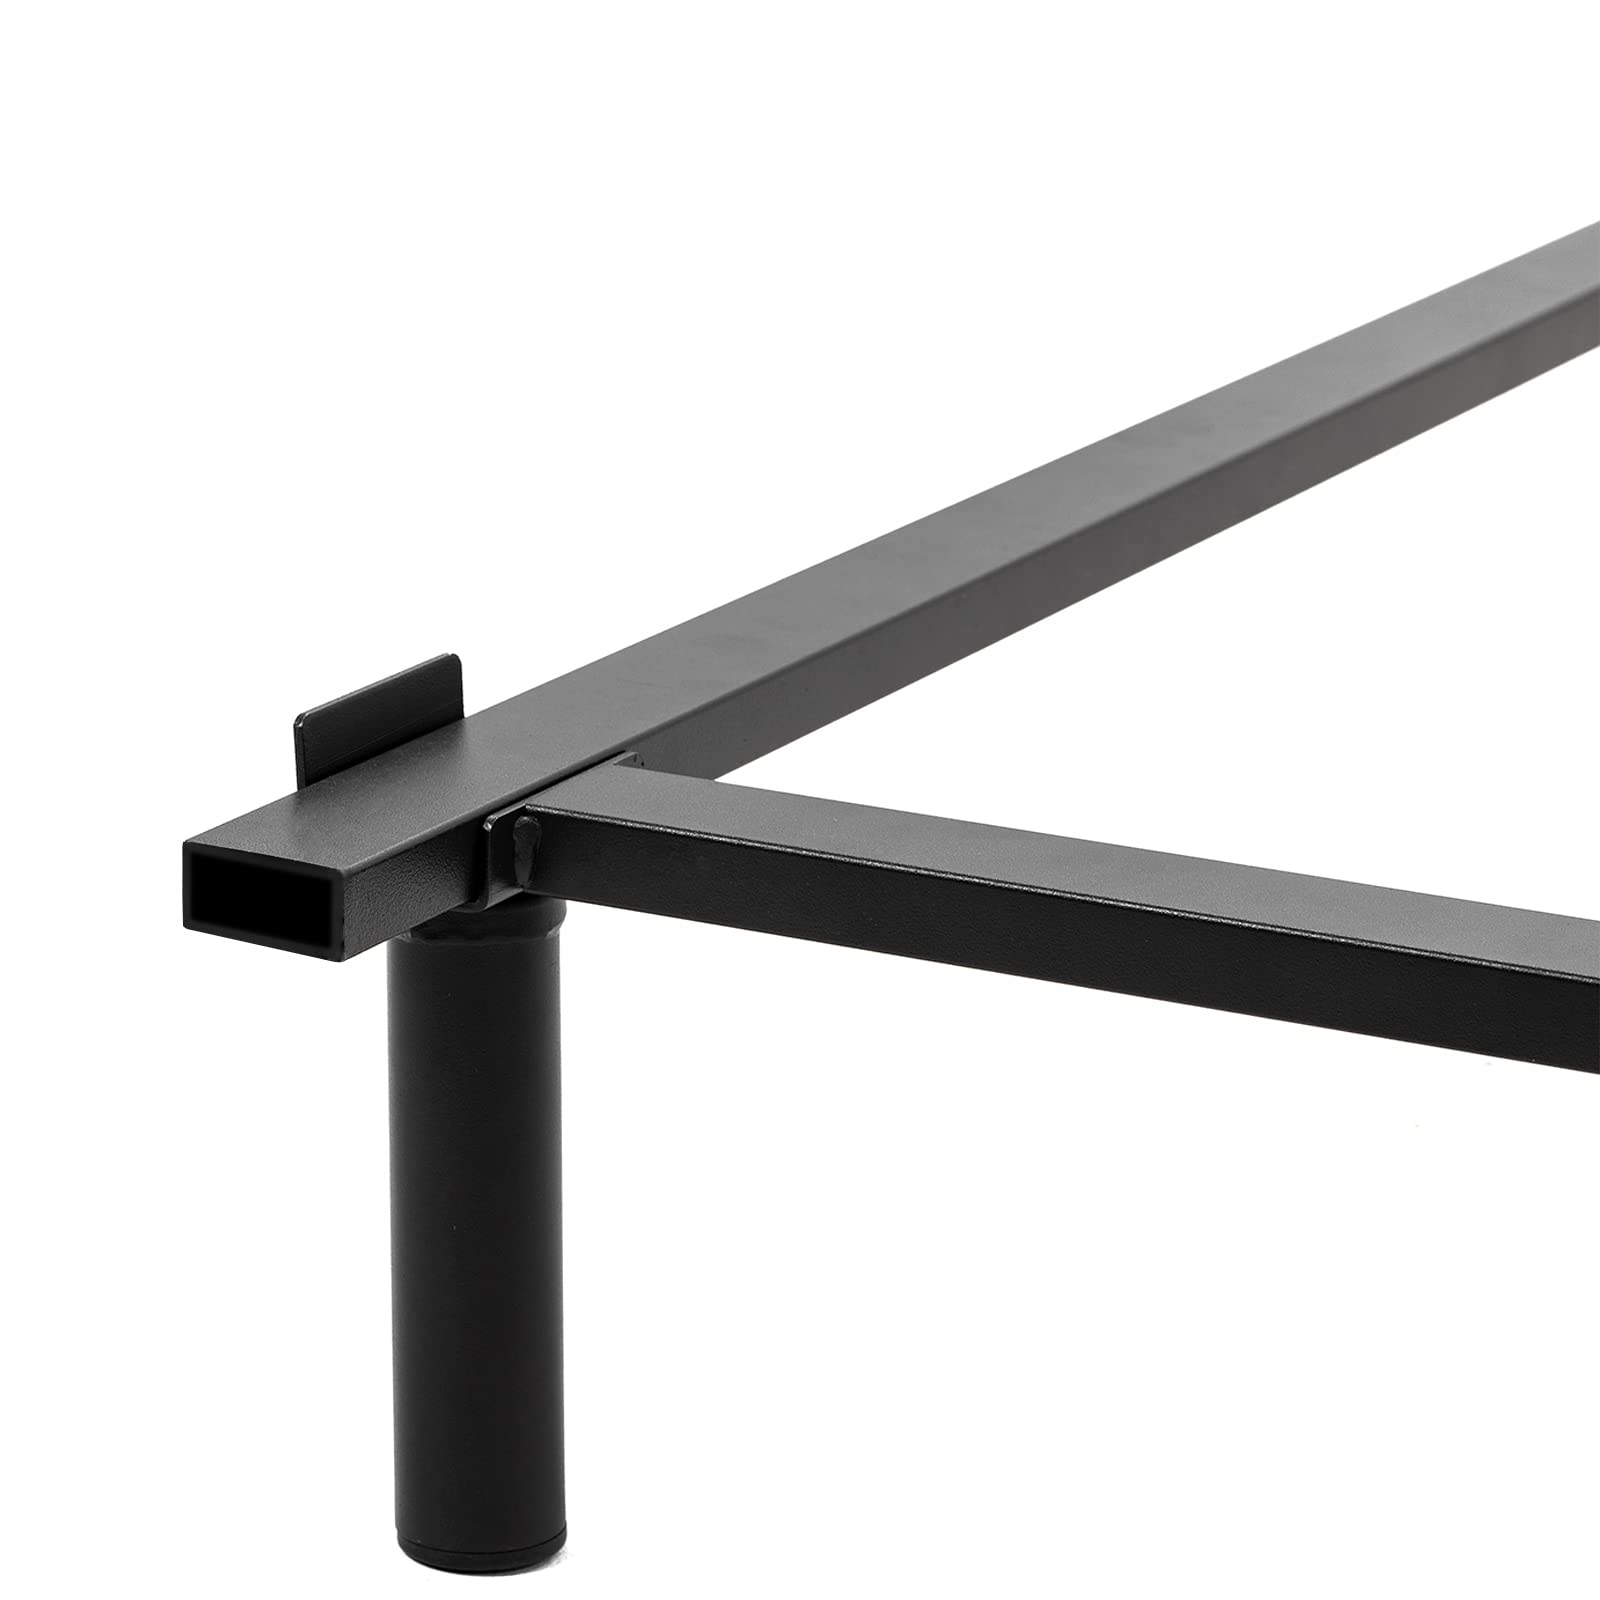 Mofesun Metal Bed Frame King - Black Metal Platform Bed 9-Leg Base, Tool Free Easy Assembly for Box Spring and Mattress (King)